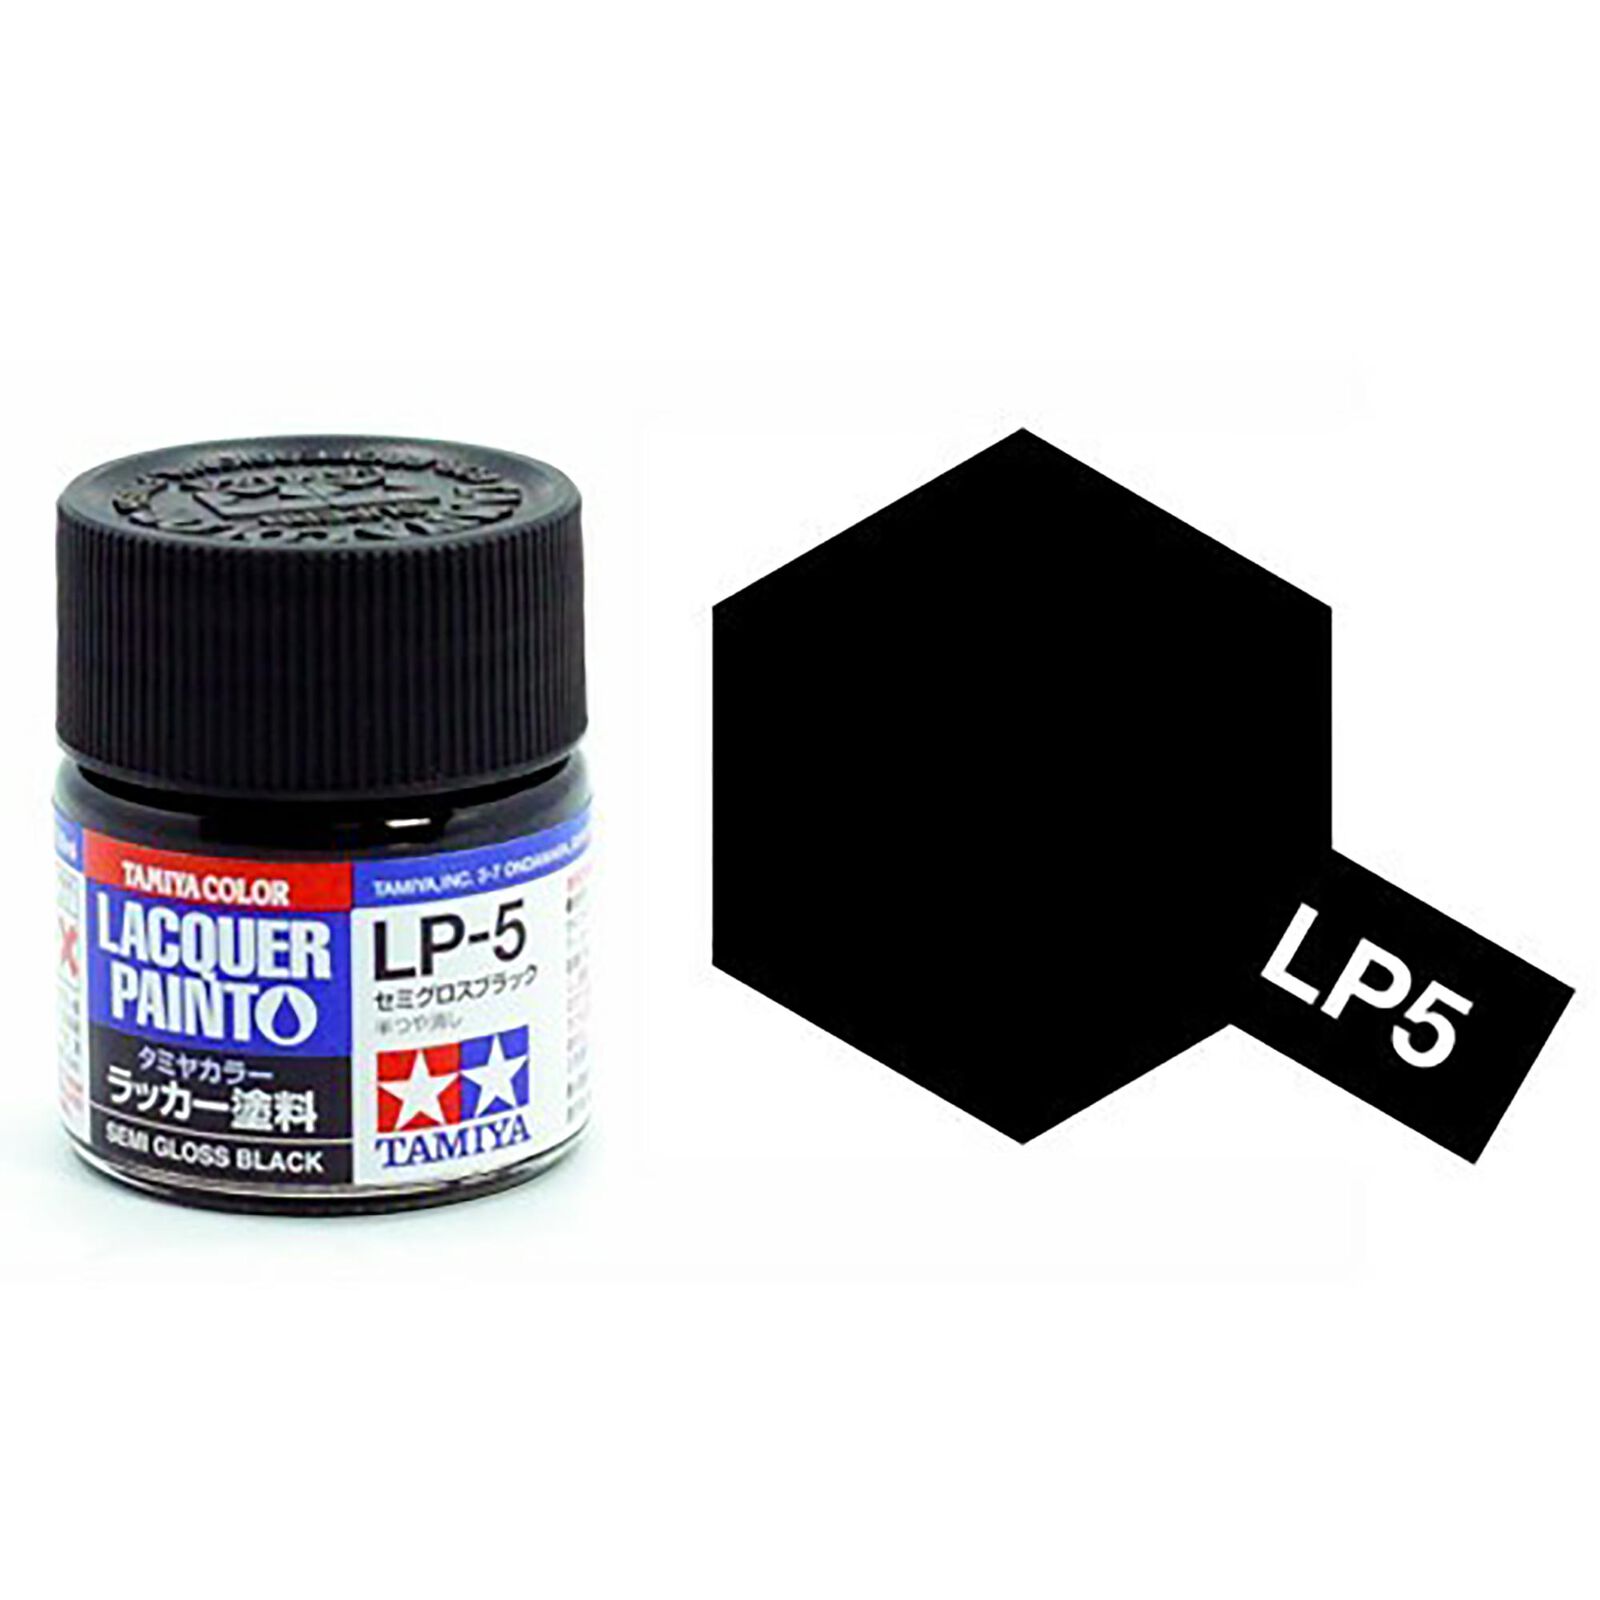 Lacquer Paint, LP-5 Semi-Gloss Black, 10 mL